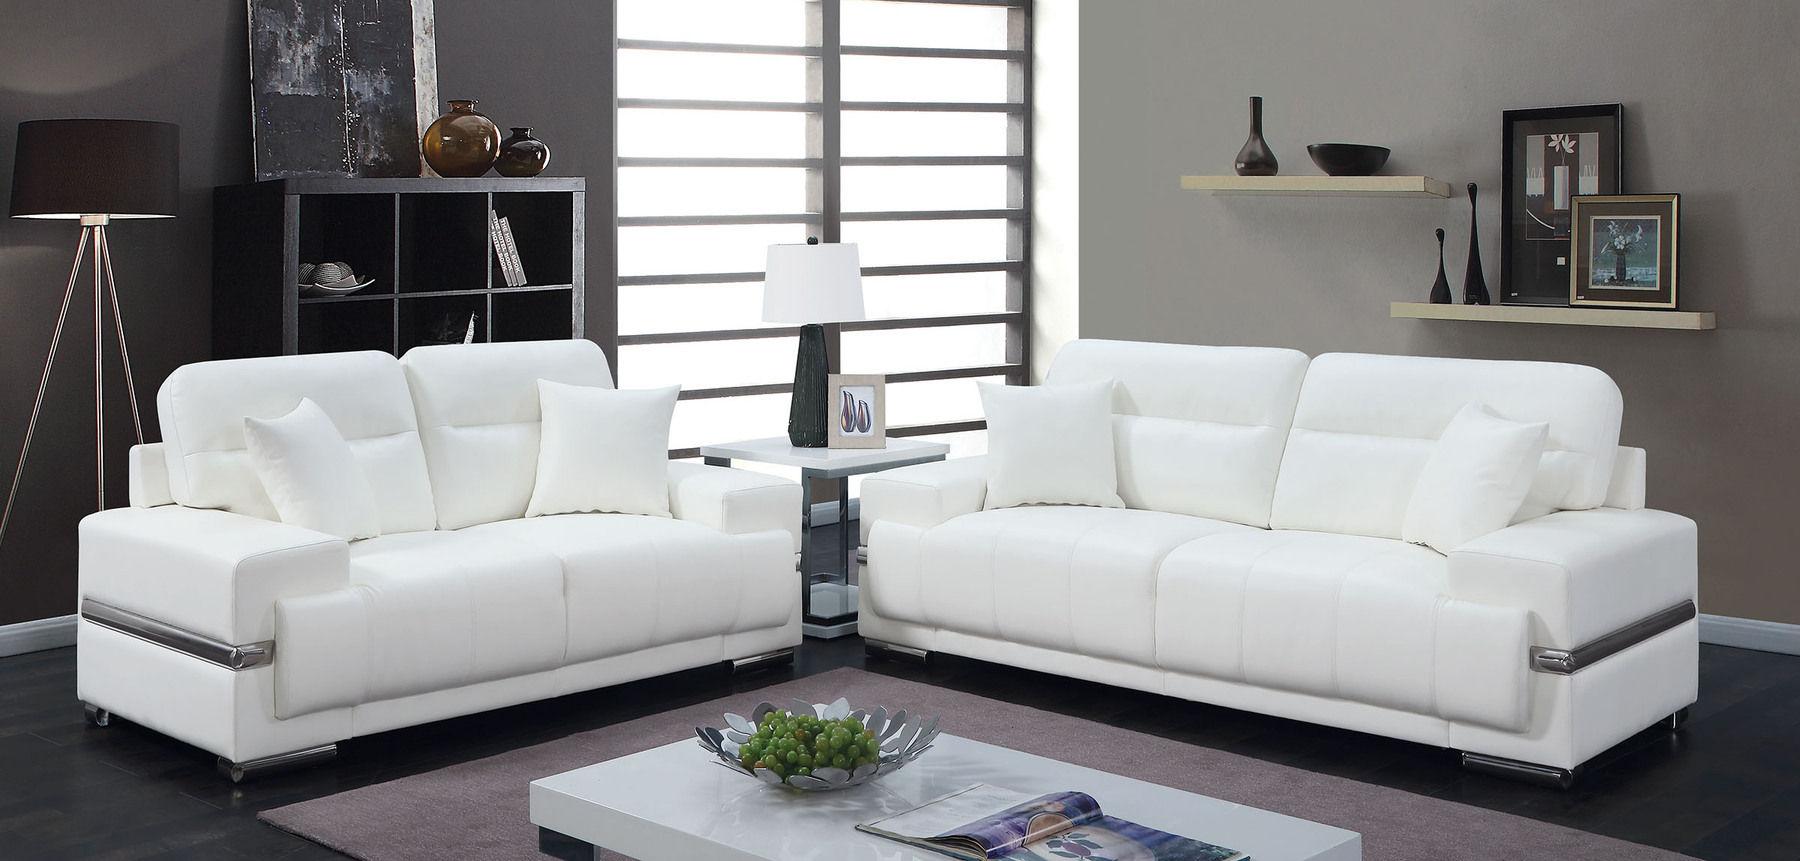 Contemporary Sofa Loveseat and Chair Set CM6411WH-3PC Zibak CM6411WH-3PC in White Breathable Leathrette